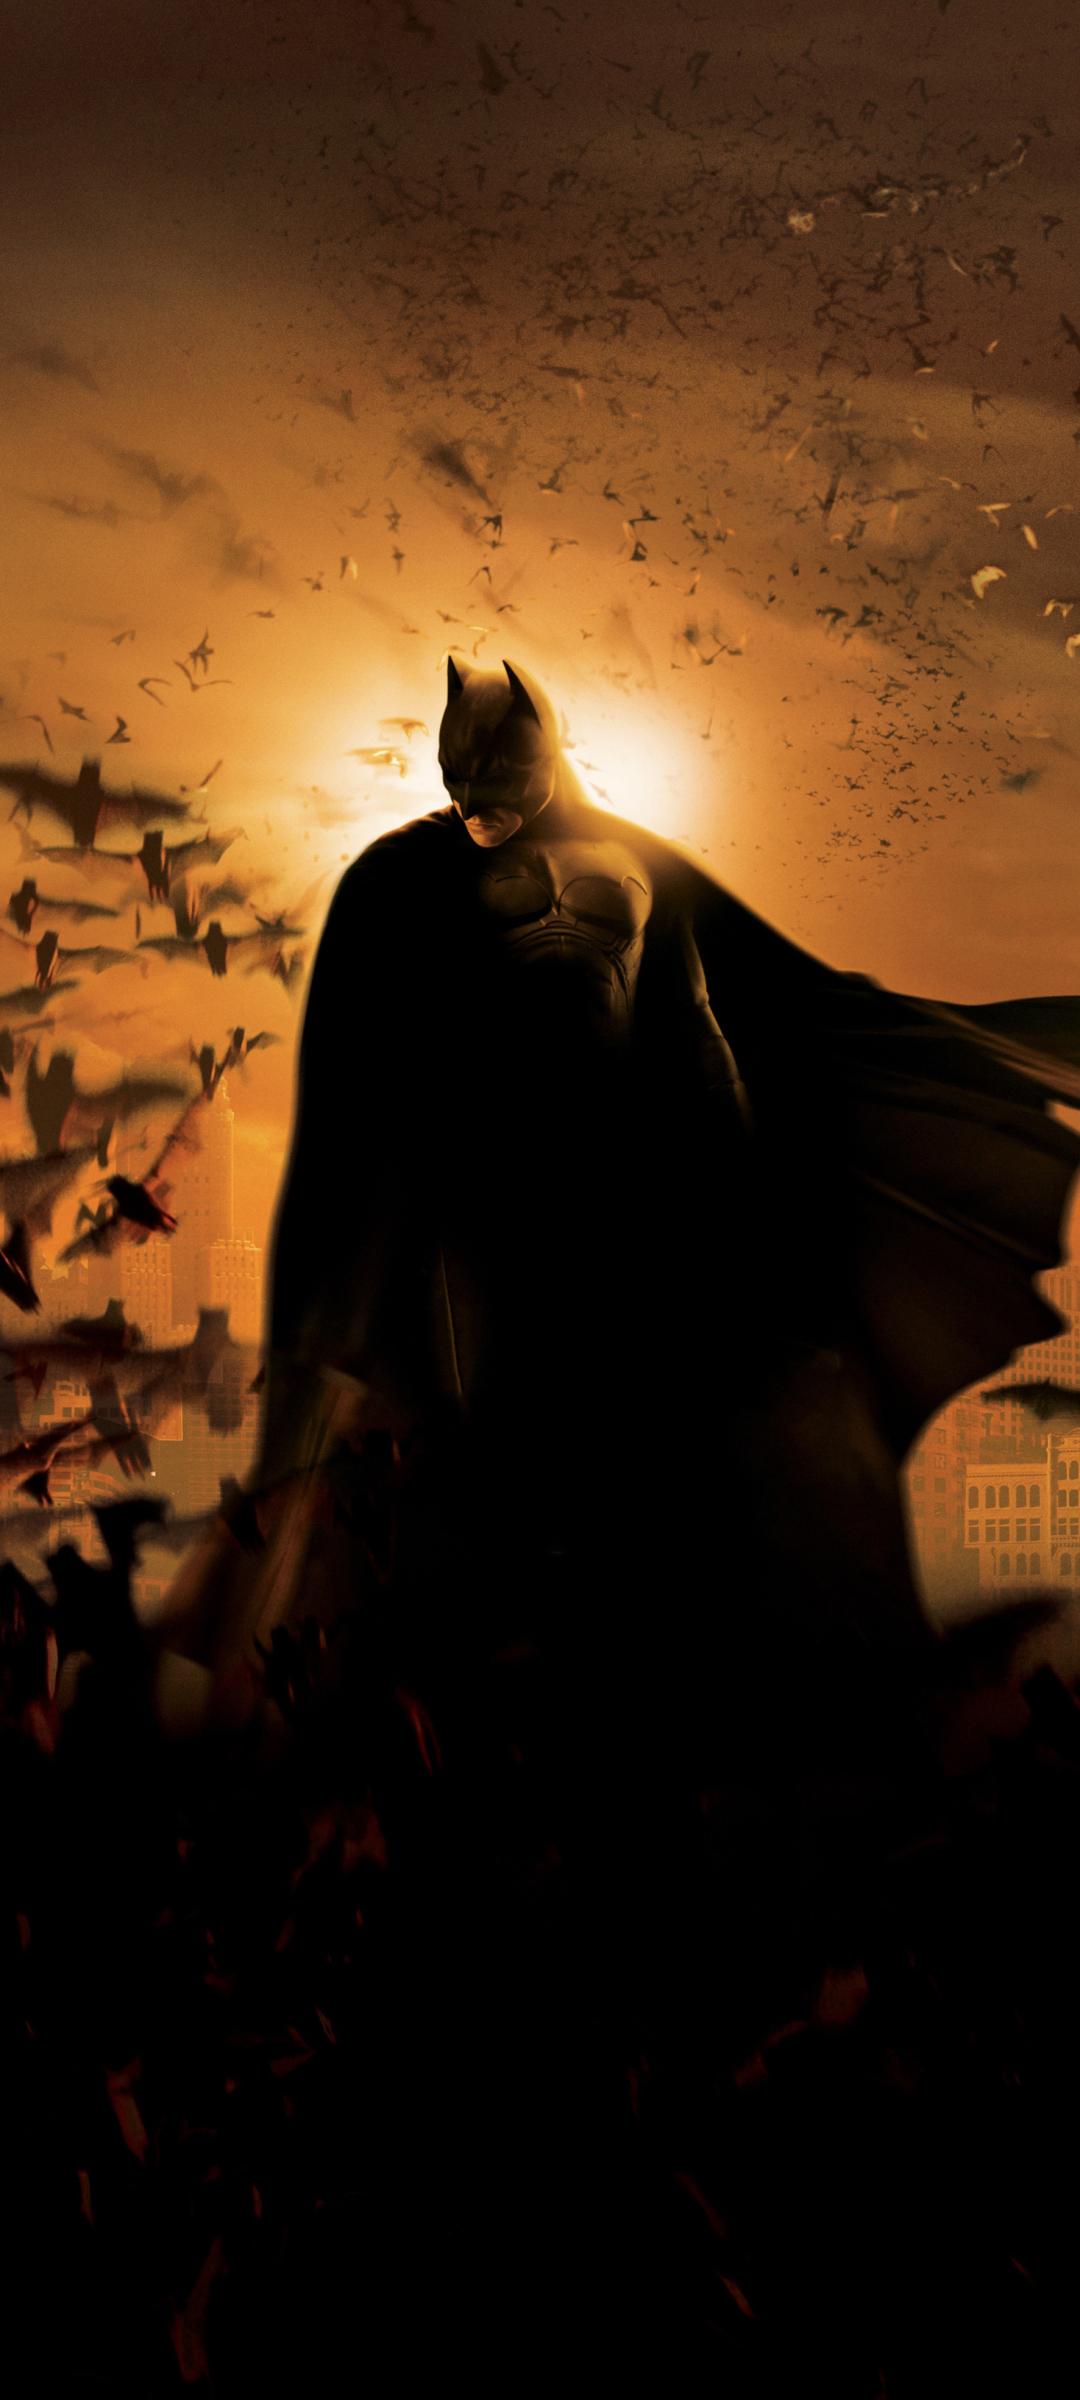 Descarga gratuita de fondo de pantalla para móvil de Noche, Murciélago, Películas, Superhéroe, Dc Comics, Hombre Murciélago, Gotham City, Batman Begins, Bruce Wayne.